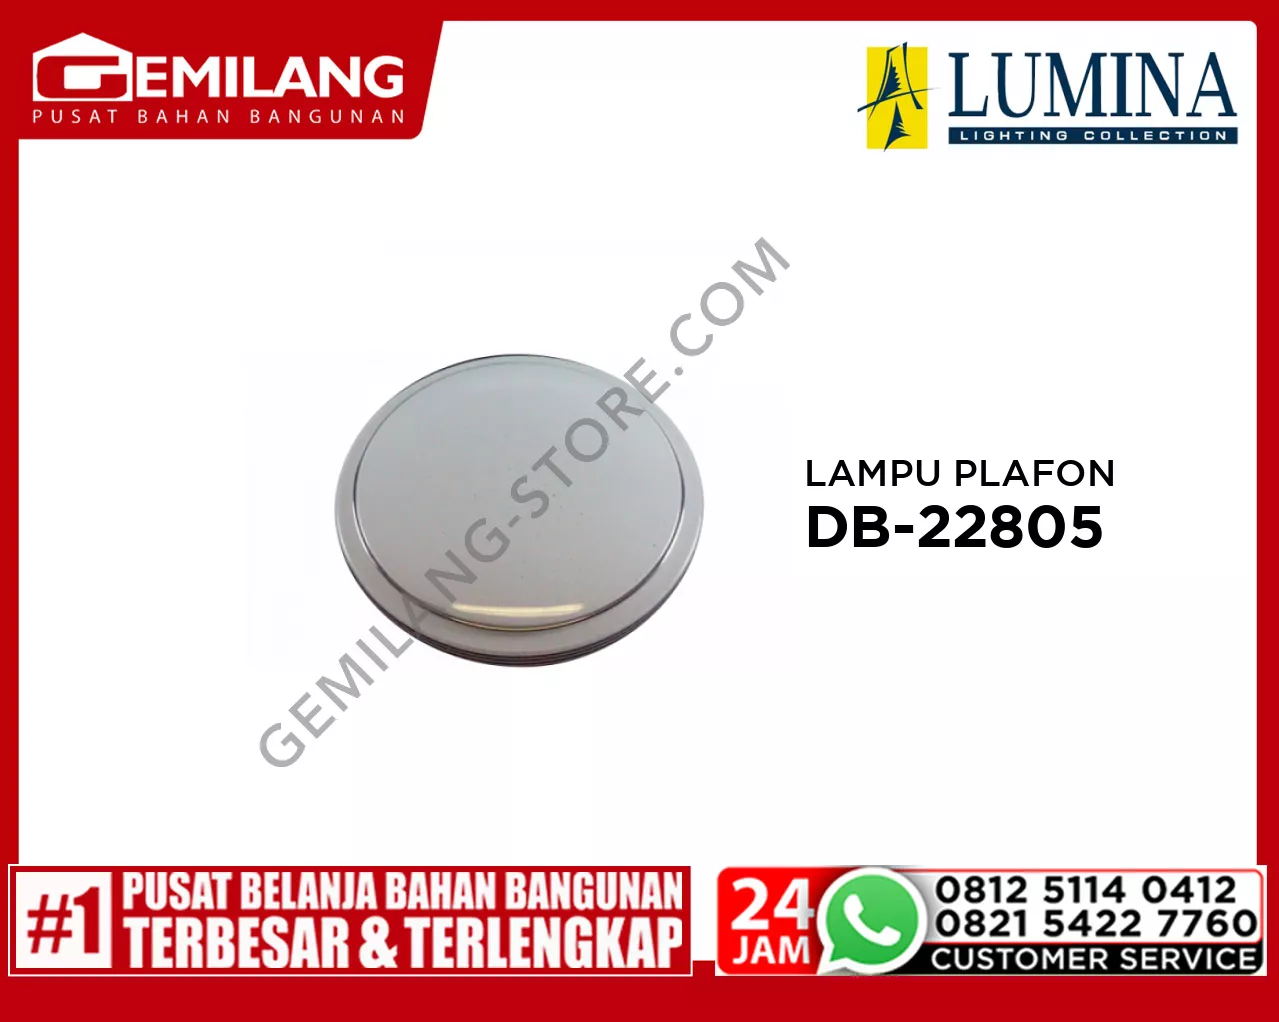 LAMPU PLAFON DB-22805/300